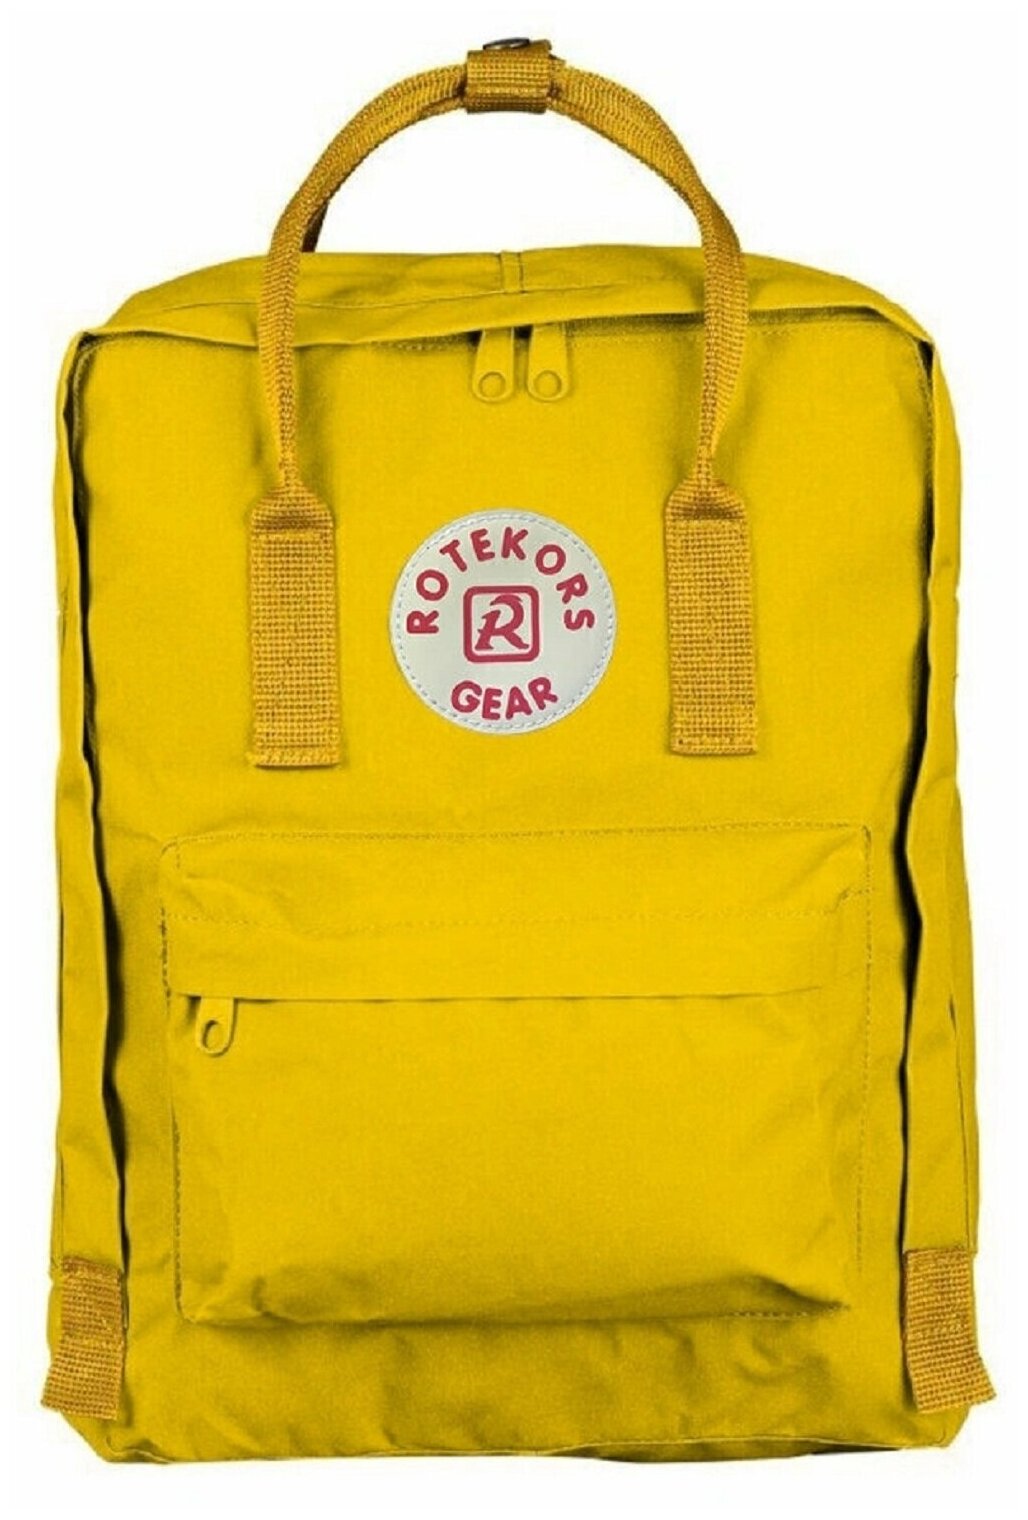 Рюкзак женский мужской унисекс - сумка для школы Rittlekors Gear Жёлтый